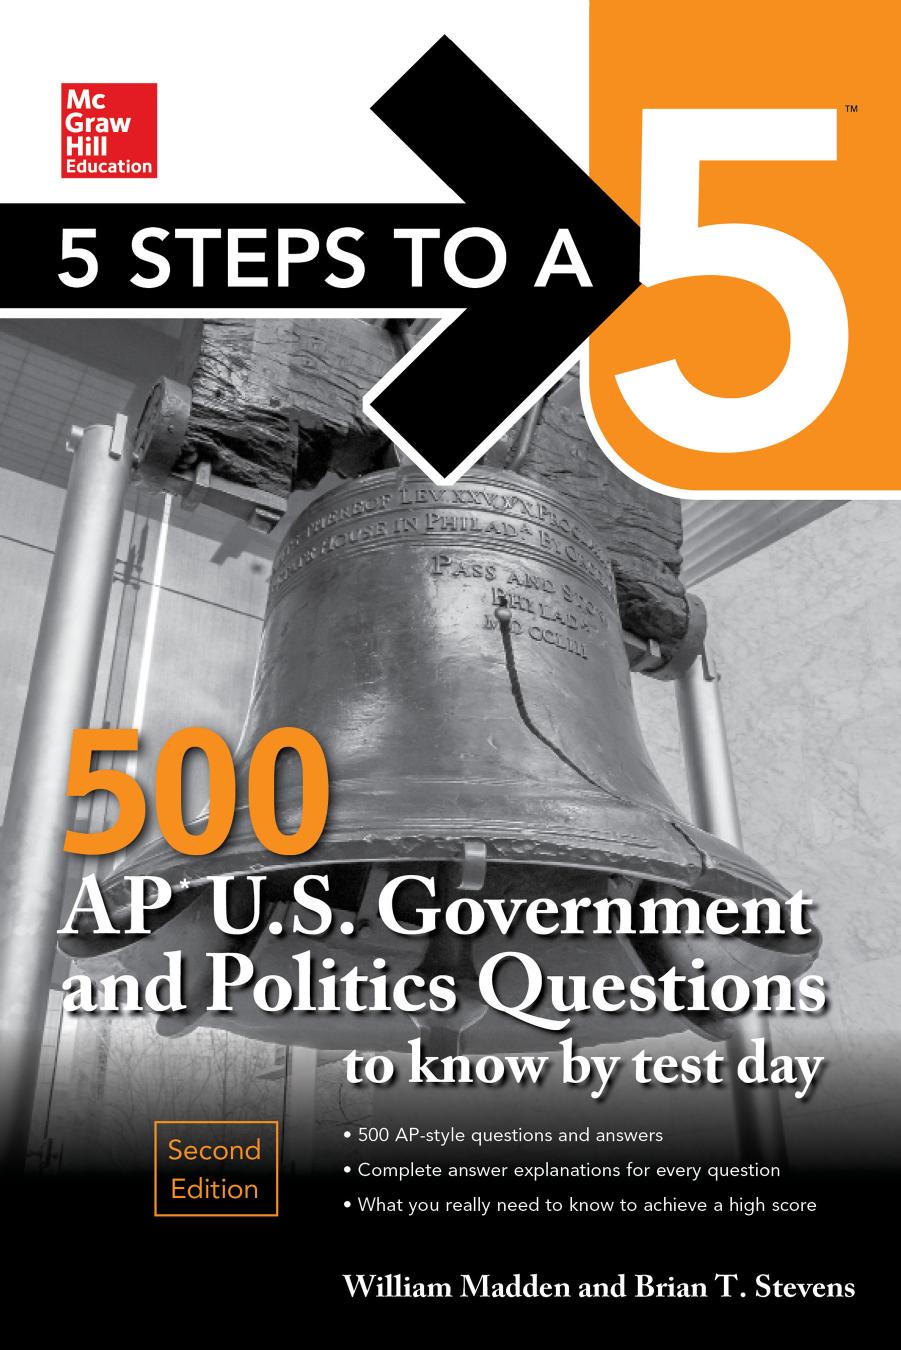 5 STEPS TO A 5â¢: 500 AP U.S. Government and Politics Questions to know by test day, Second Edition by William Madden && Brian T. Stevens